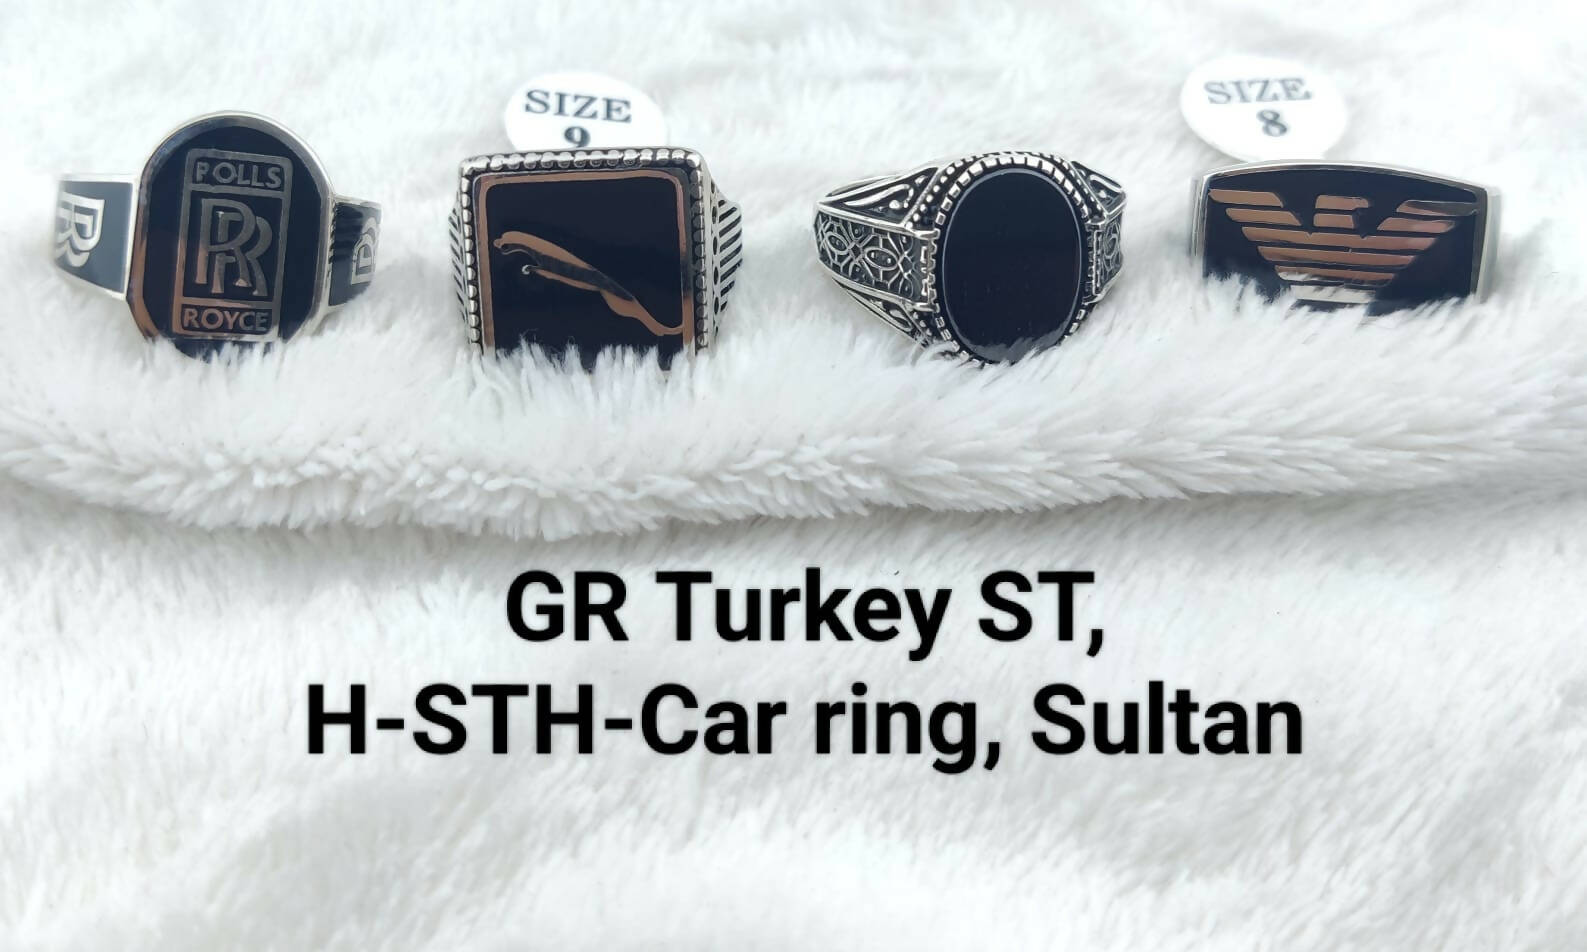 925 Silver Gents Bracelet – Sarafa Bazar India